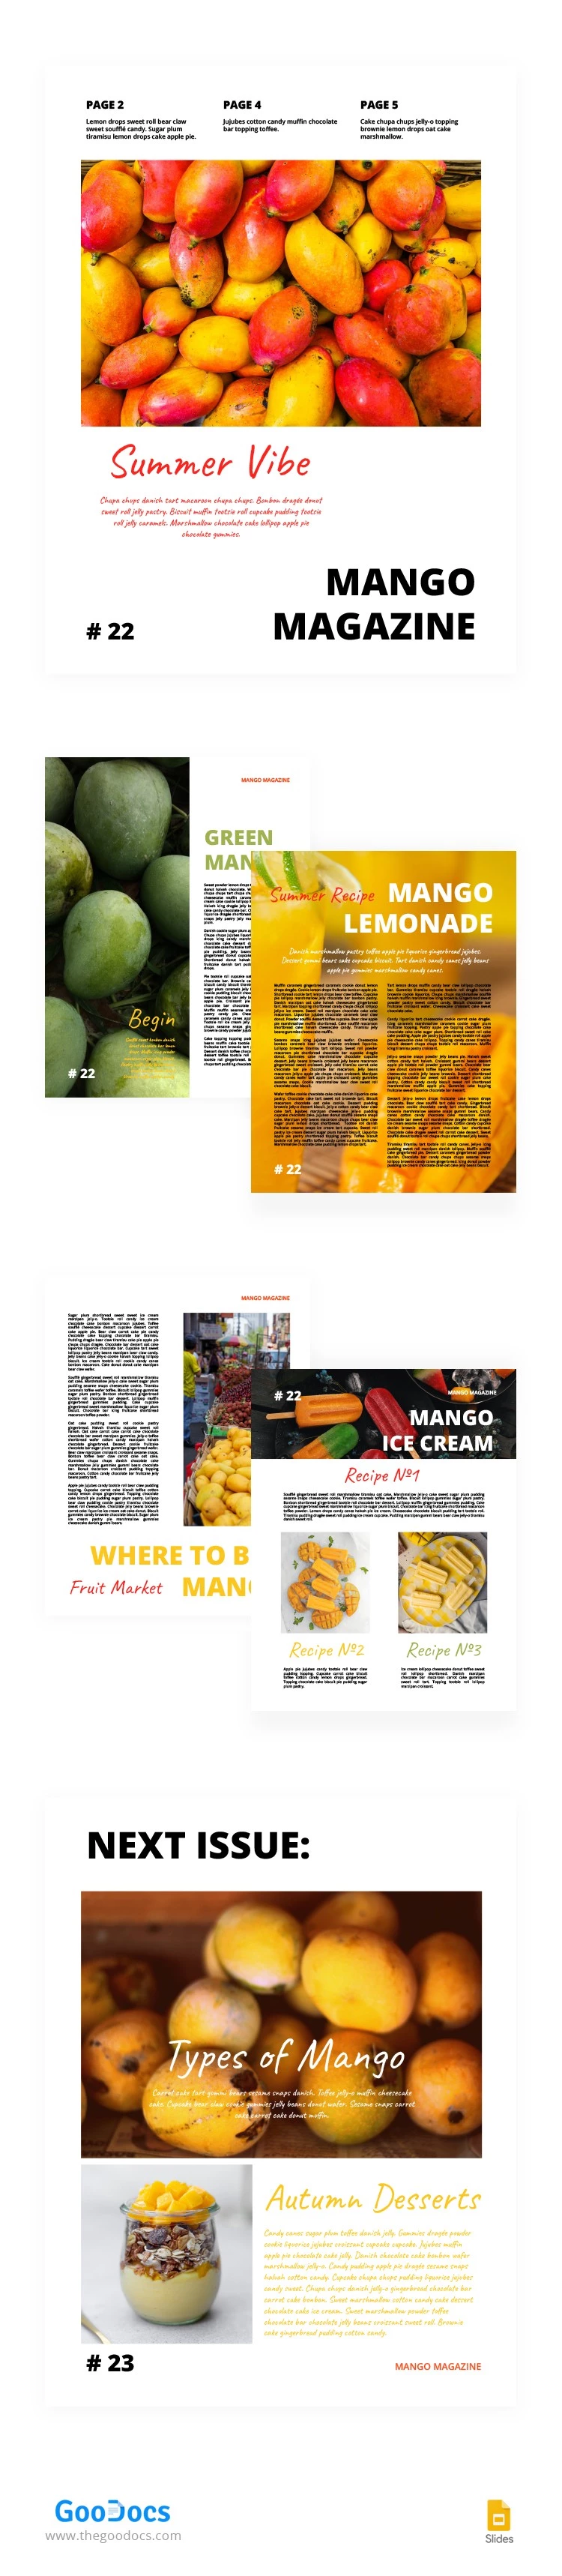 Bright Fruit Magazine - free Google Docs Template - 10063860